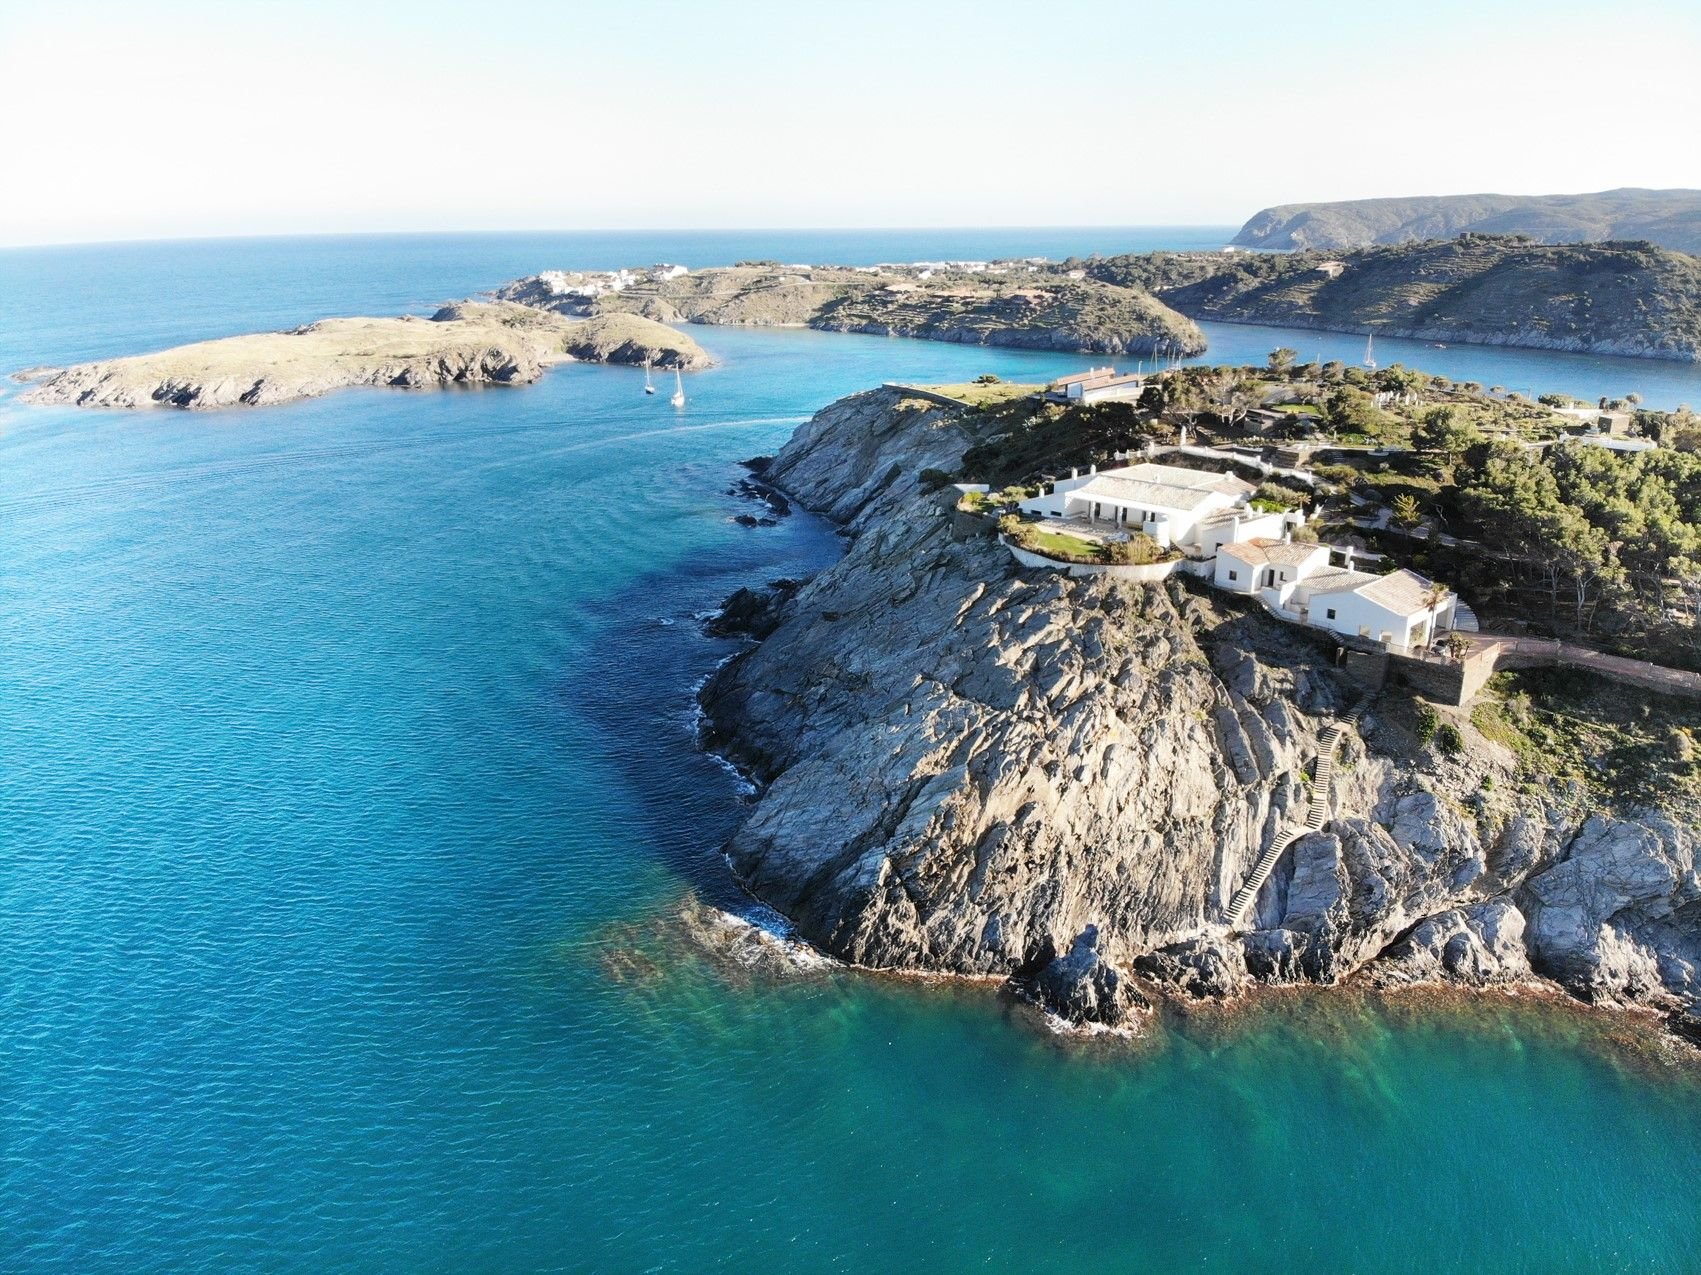 Luxury villa in Cadaqués, Spain, on the Mediterranean coast